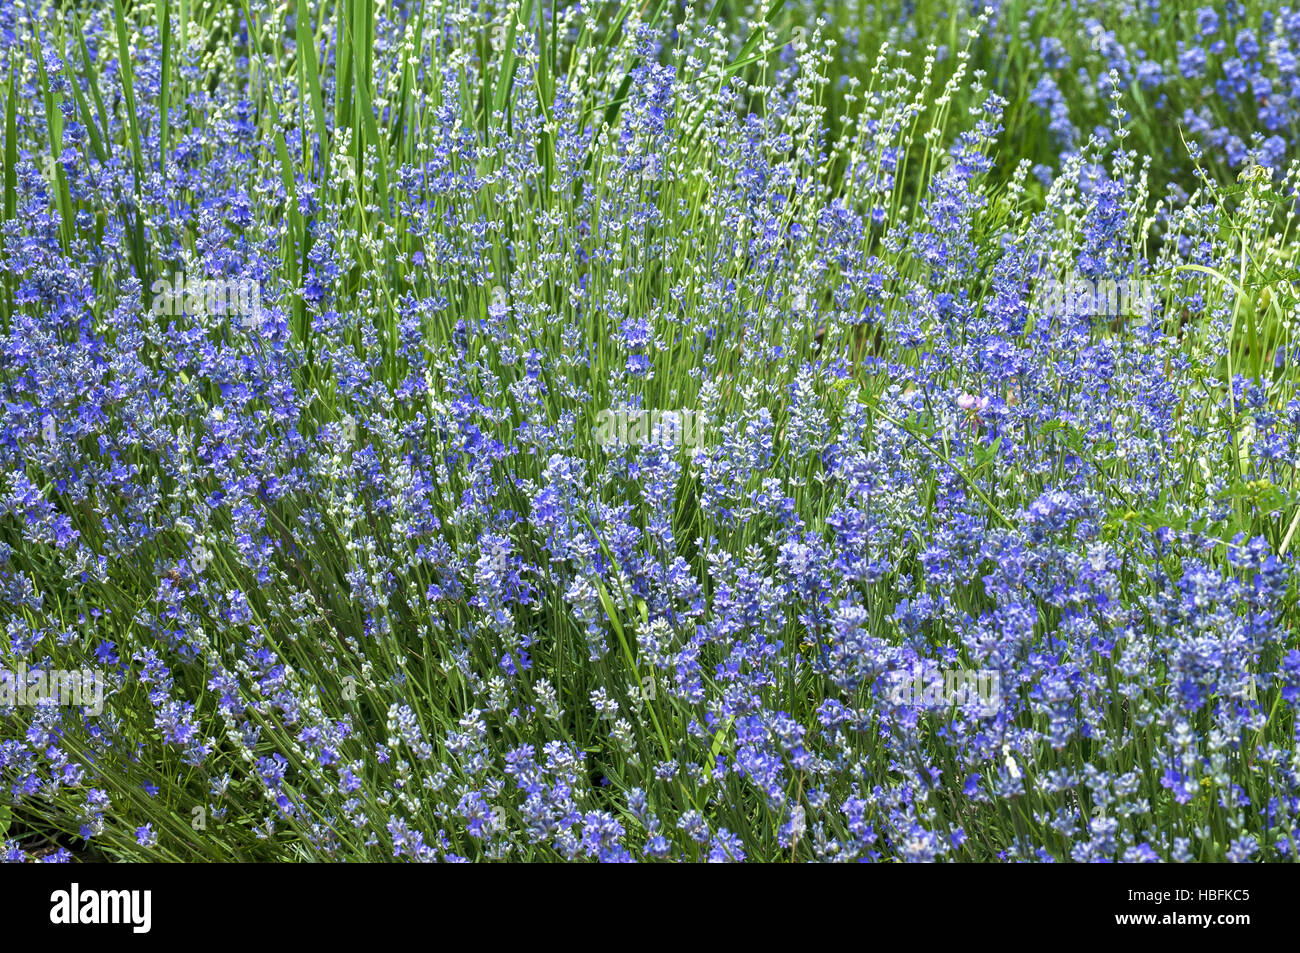 Salvia blue violet flower stems Stock Photo